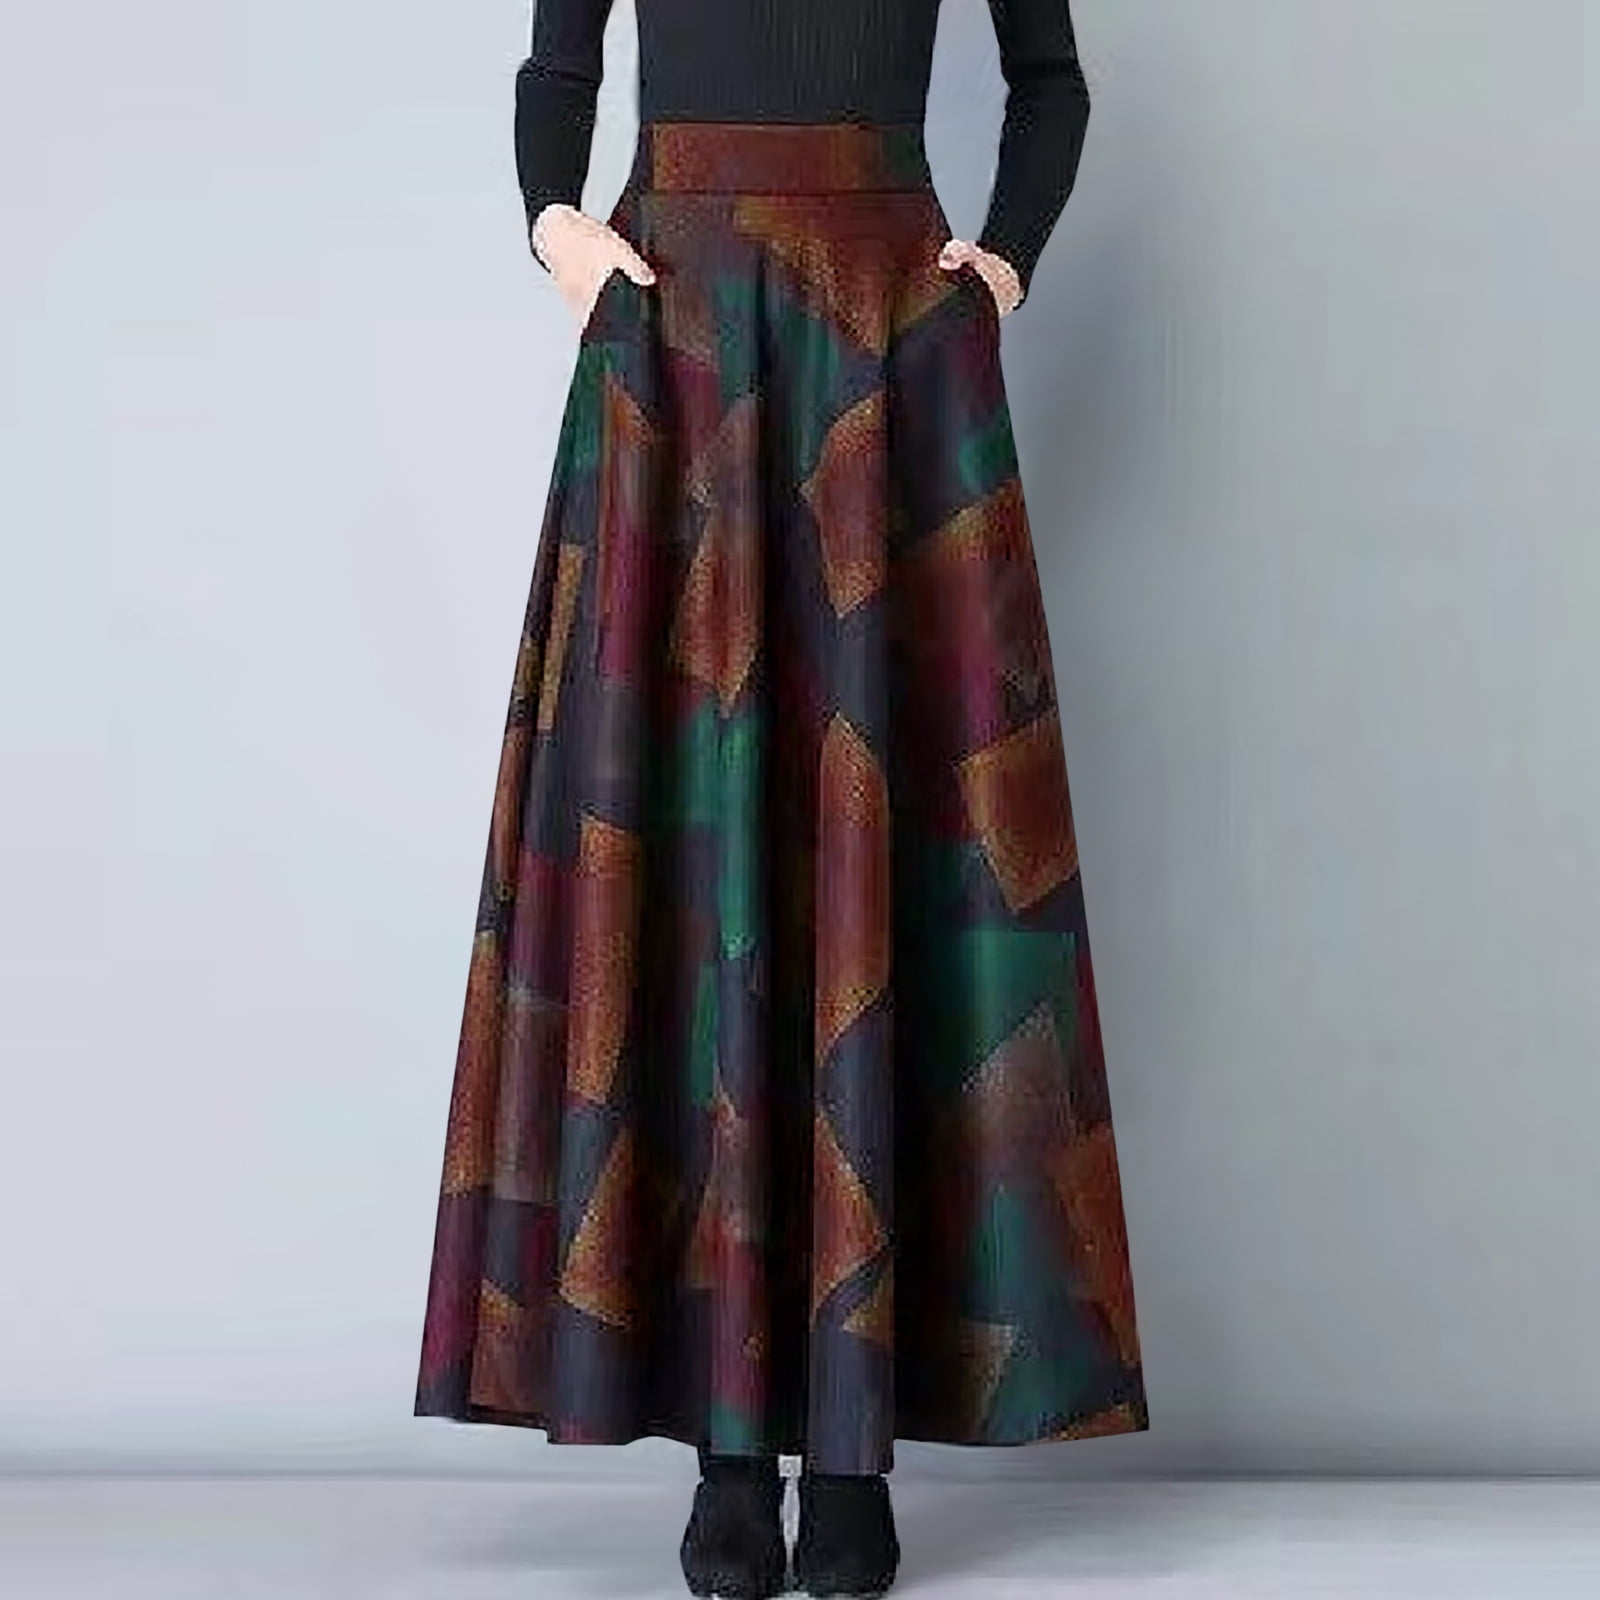 pbnbp Womens High Elastic Waist Maxi Skirt Floral Print A Line Vintage ...